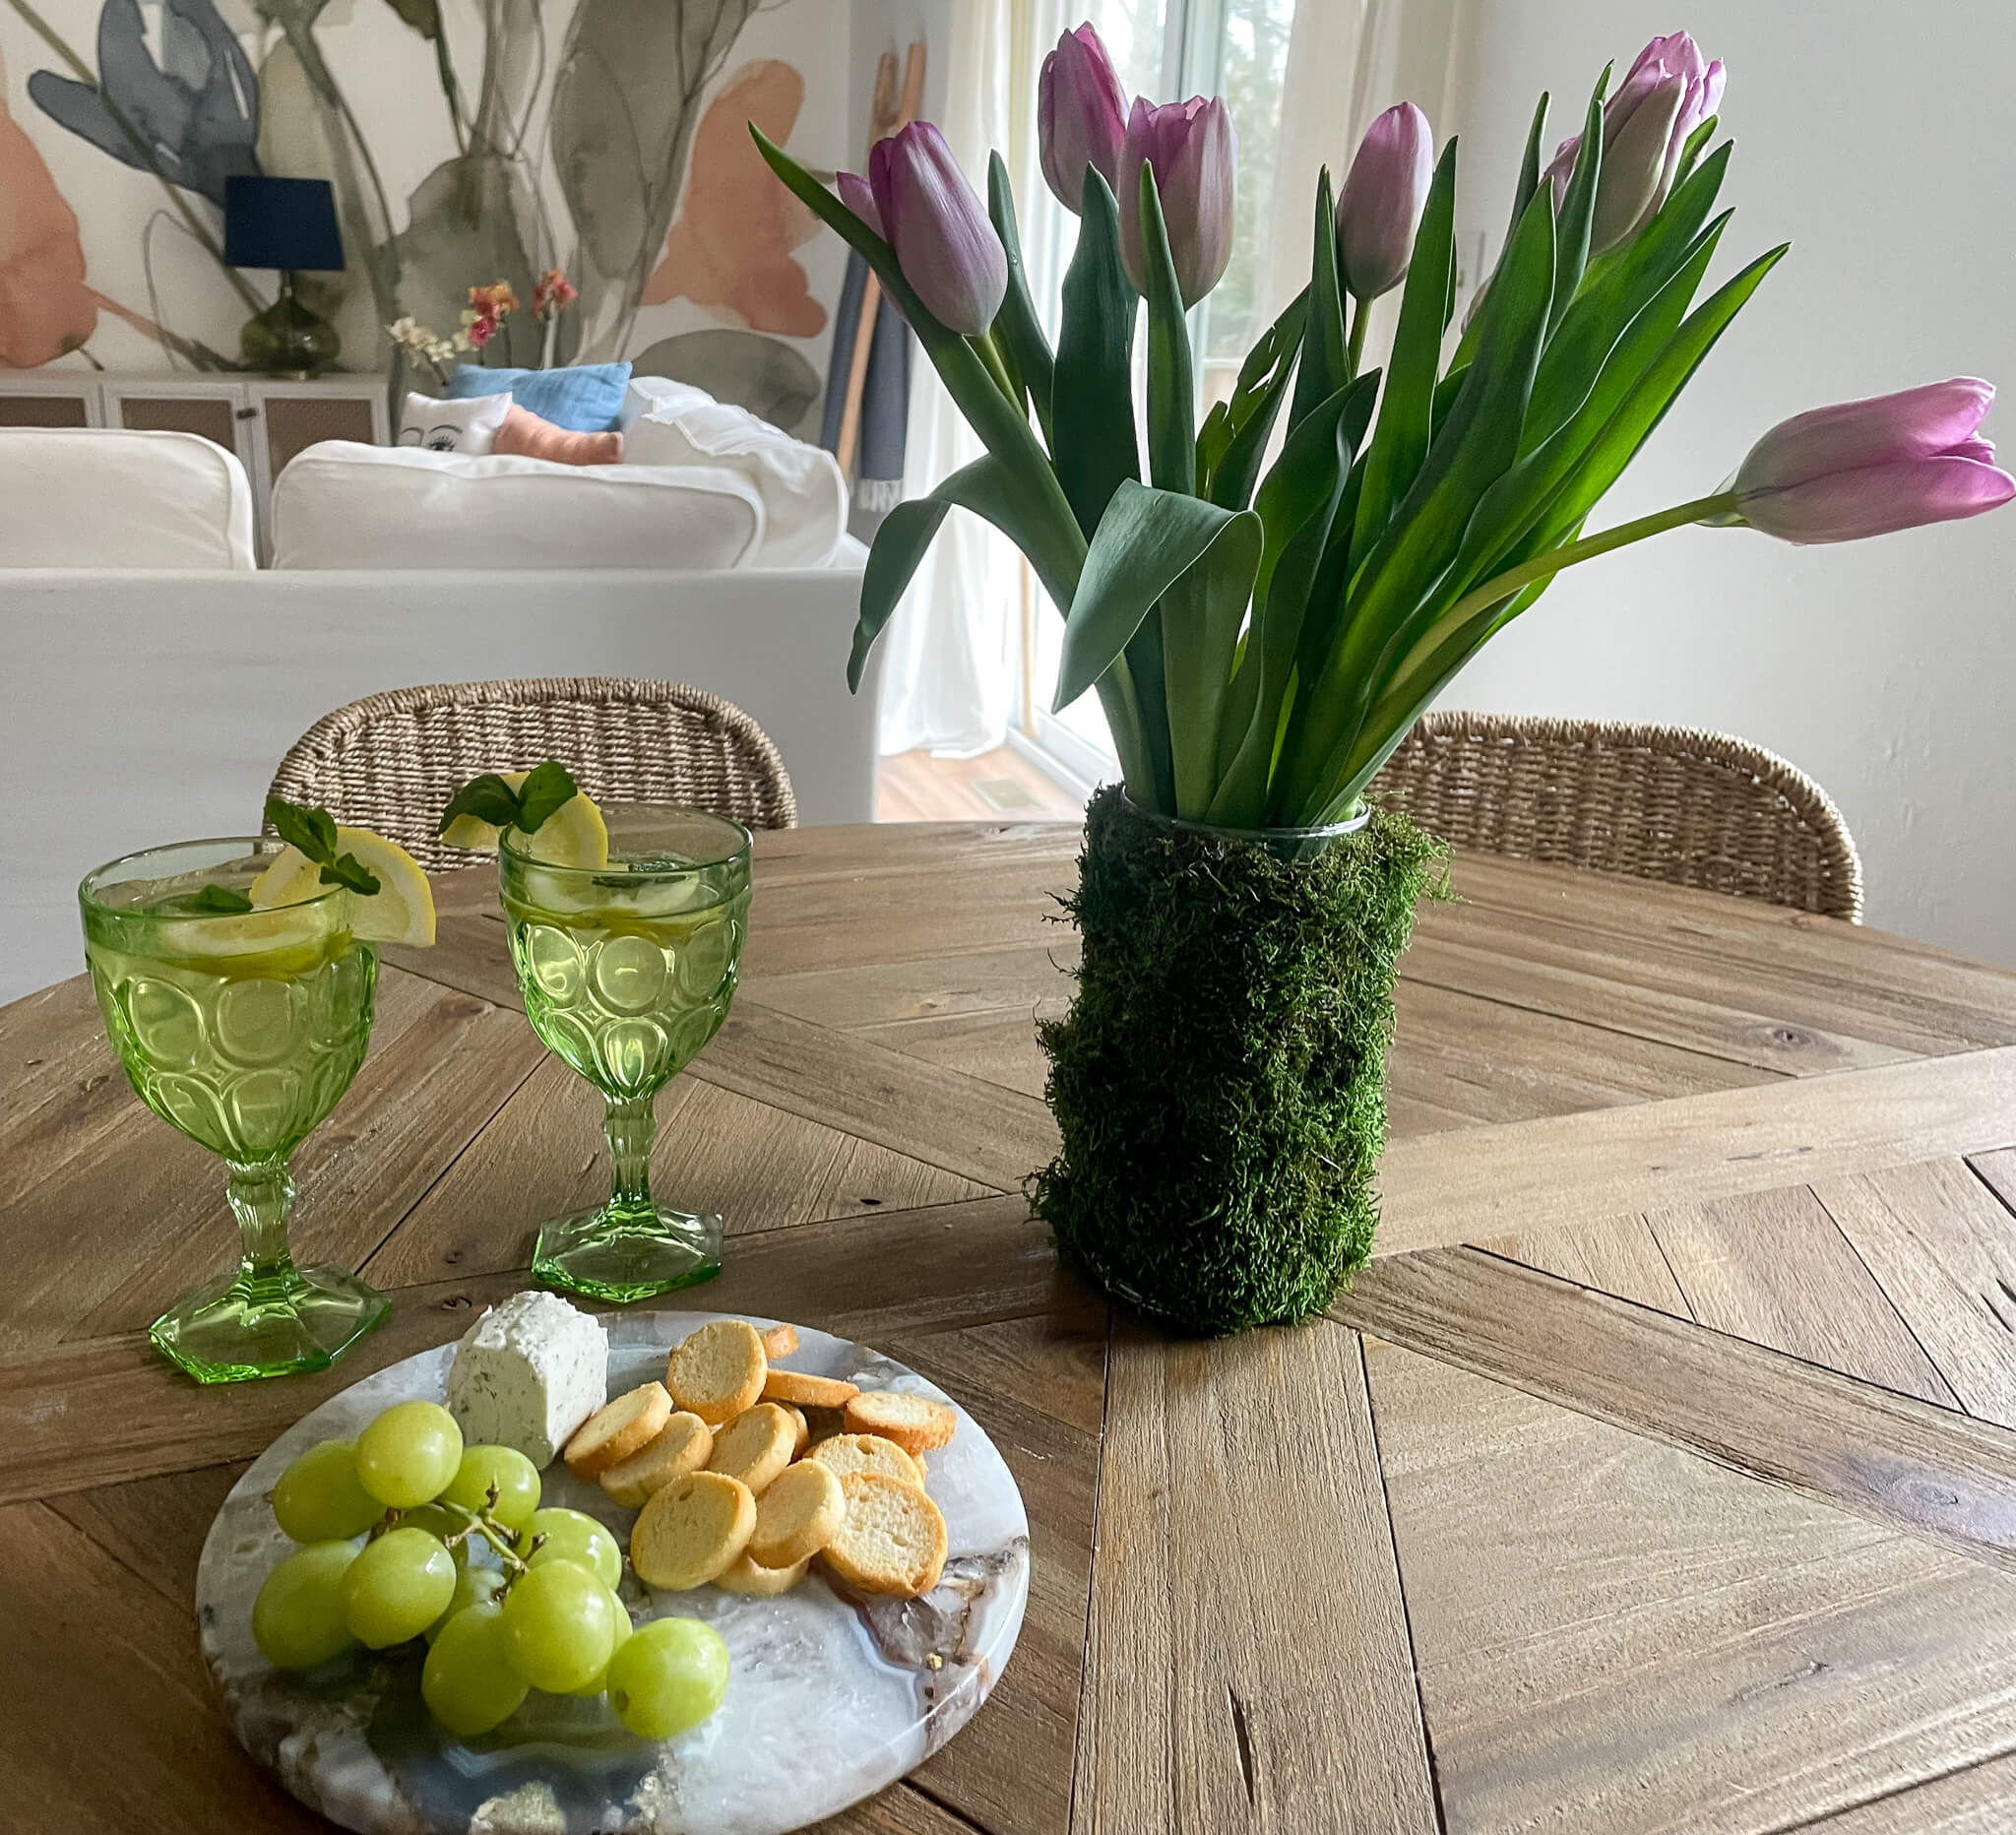 Refreshing Lemon-Lime Sangria for Spring dishes.